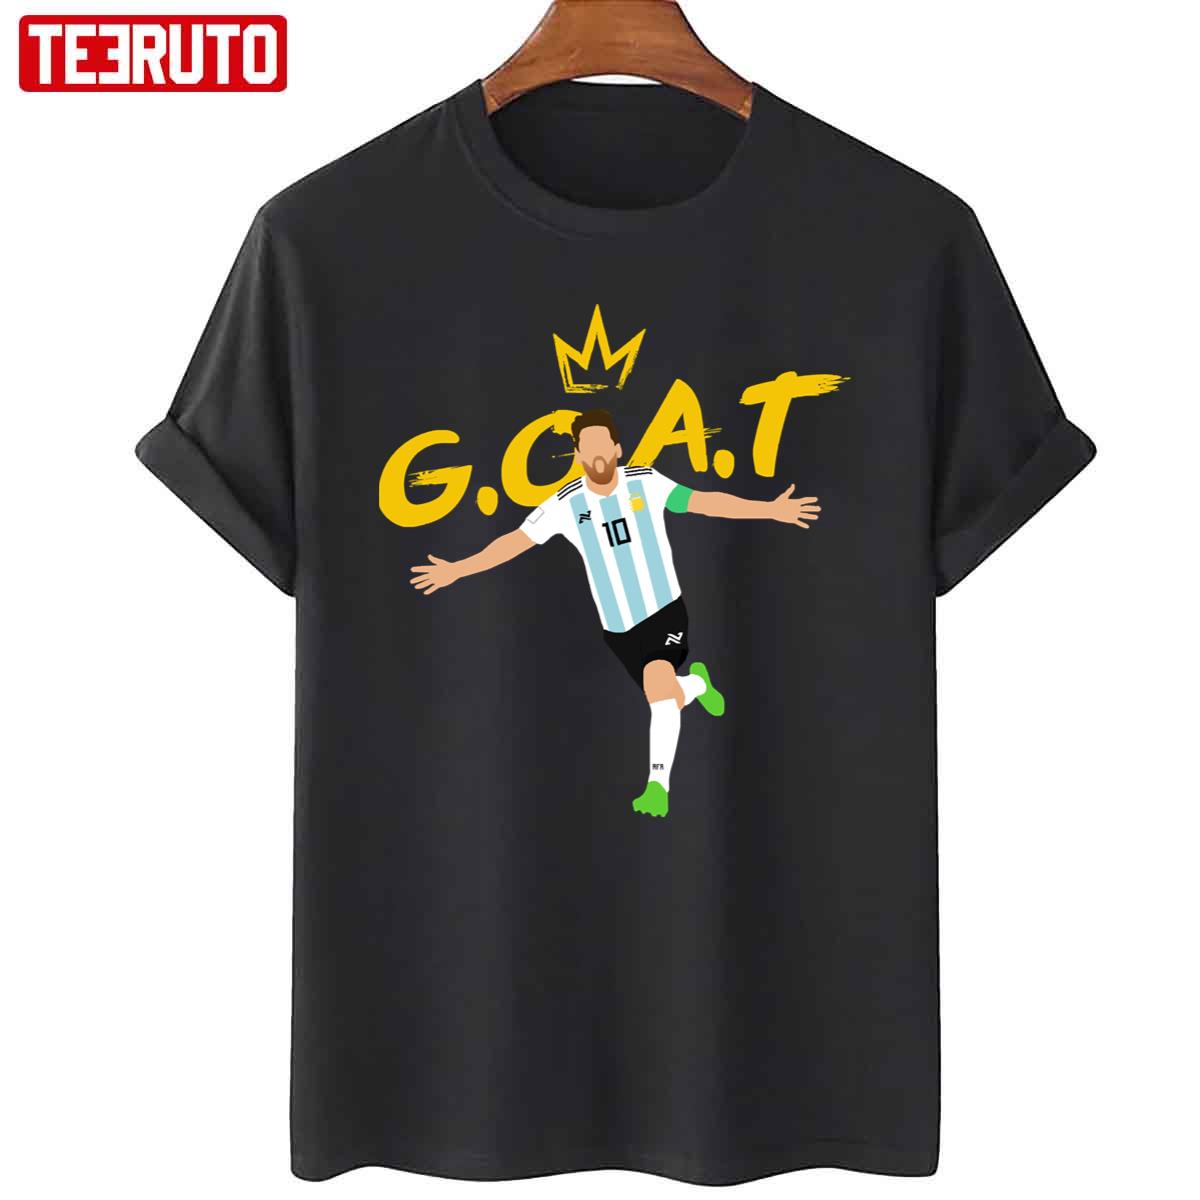 Lionel Messi G.O.A.T Unisex T-Shirt